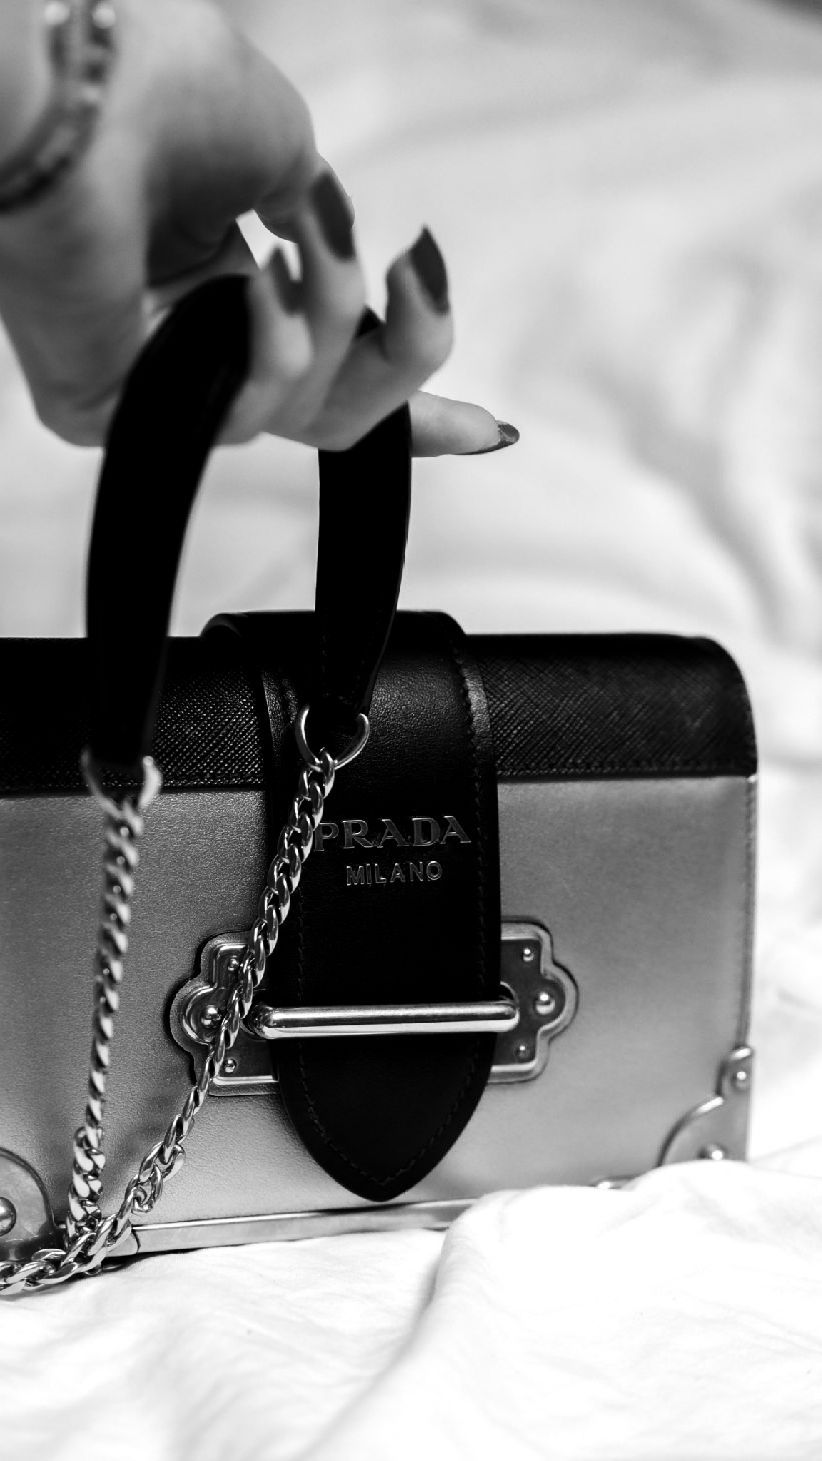 Prada hangbag black and white photography